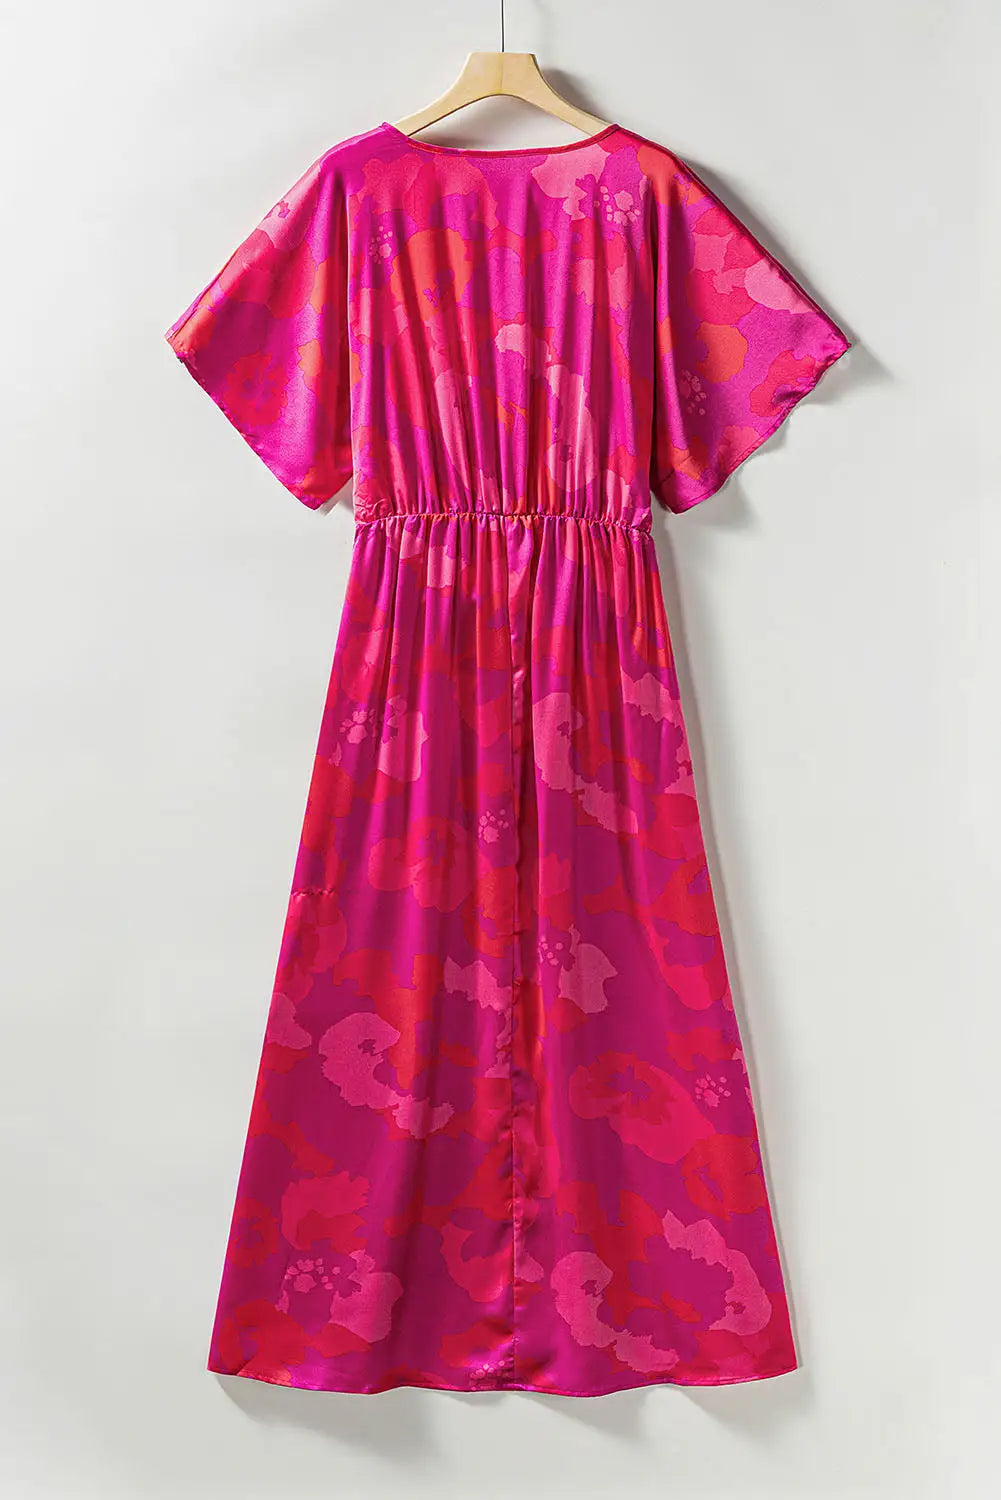 Rose abstract floral print v neck dolman maxi dress - dresses